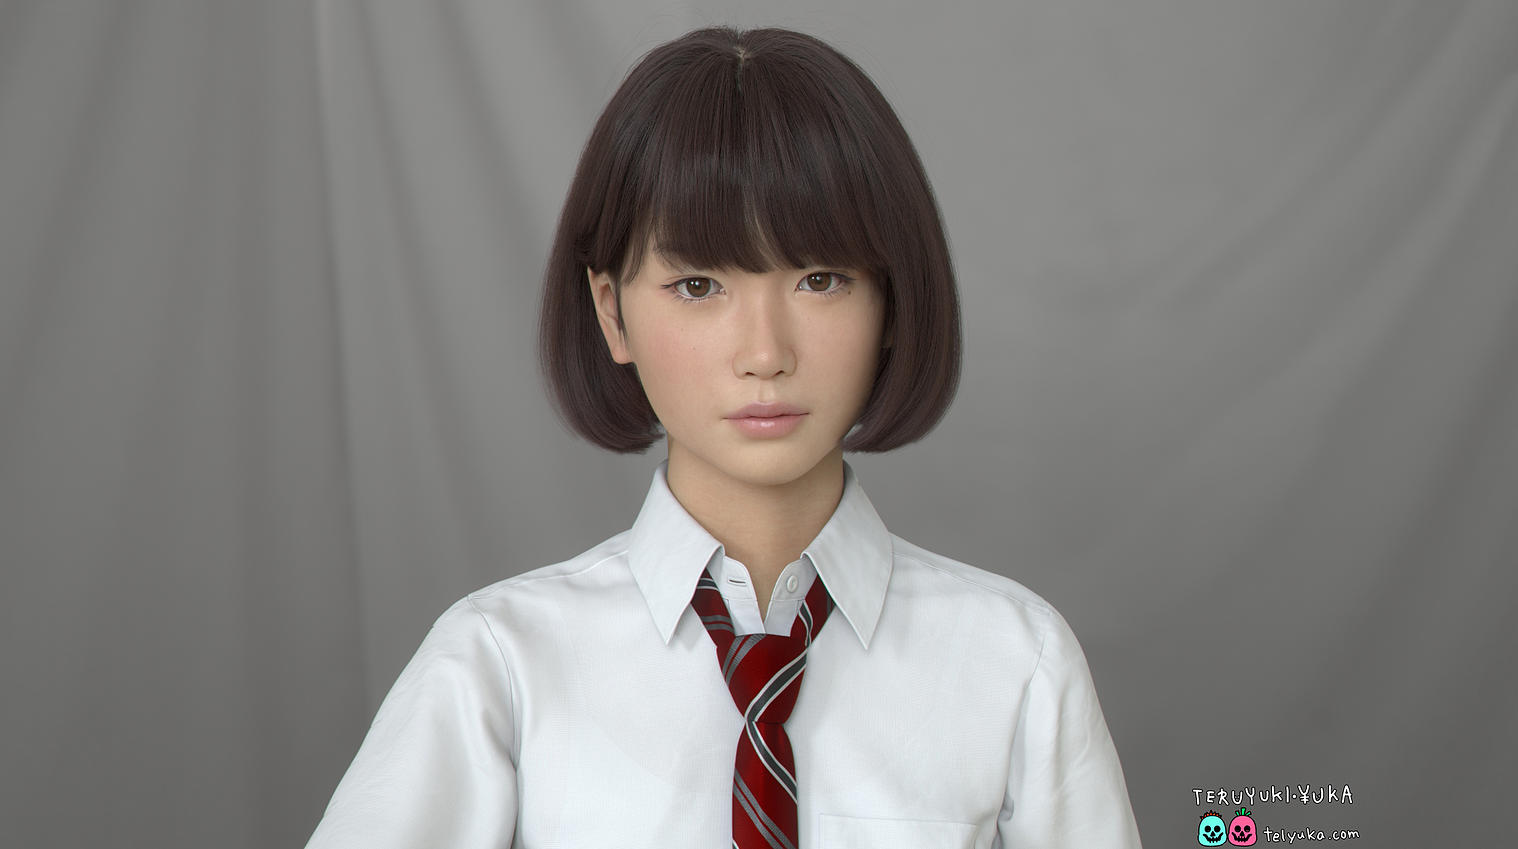 Meet Saya, the Japanese Schoolgirl Too Perfect to Be Real!